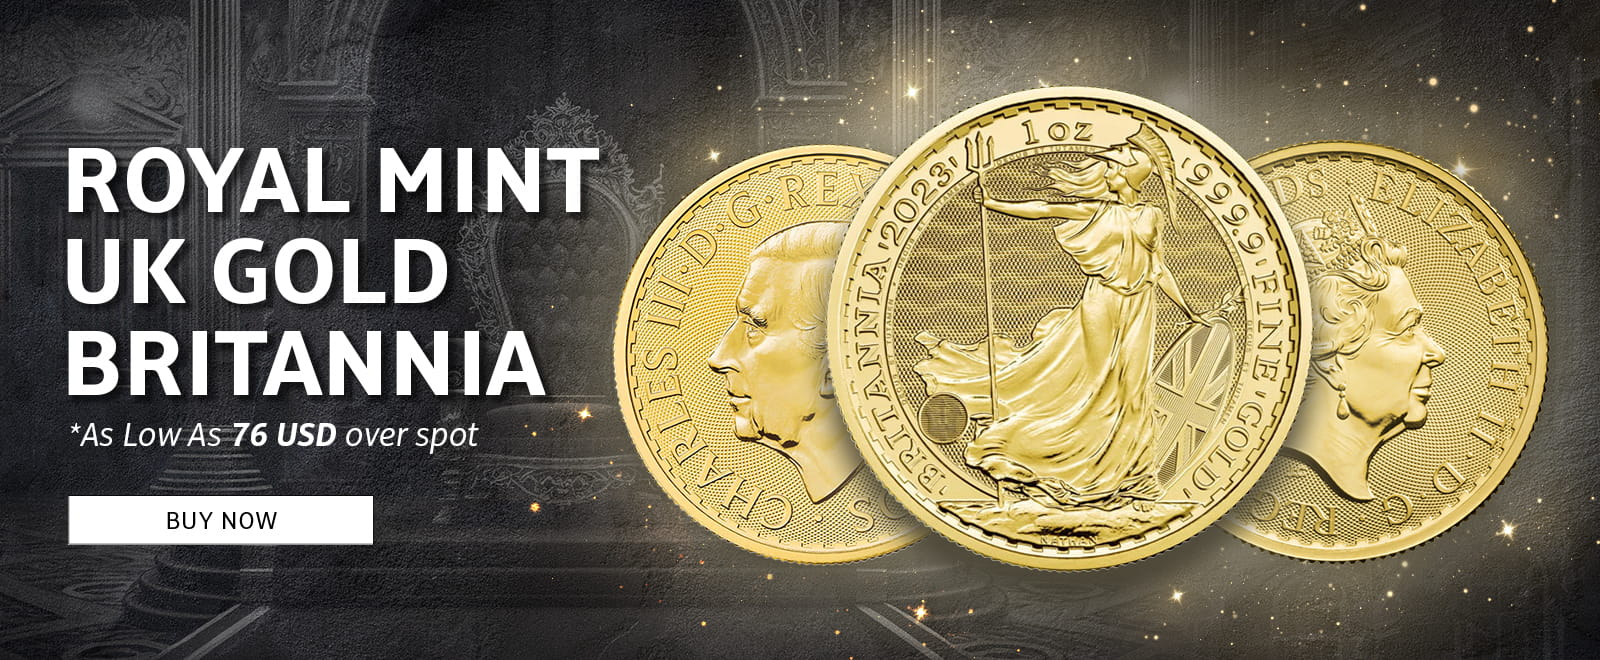 Royal Mint UK Gold Britannias - As low as 76 USD over spot